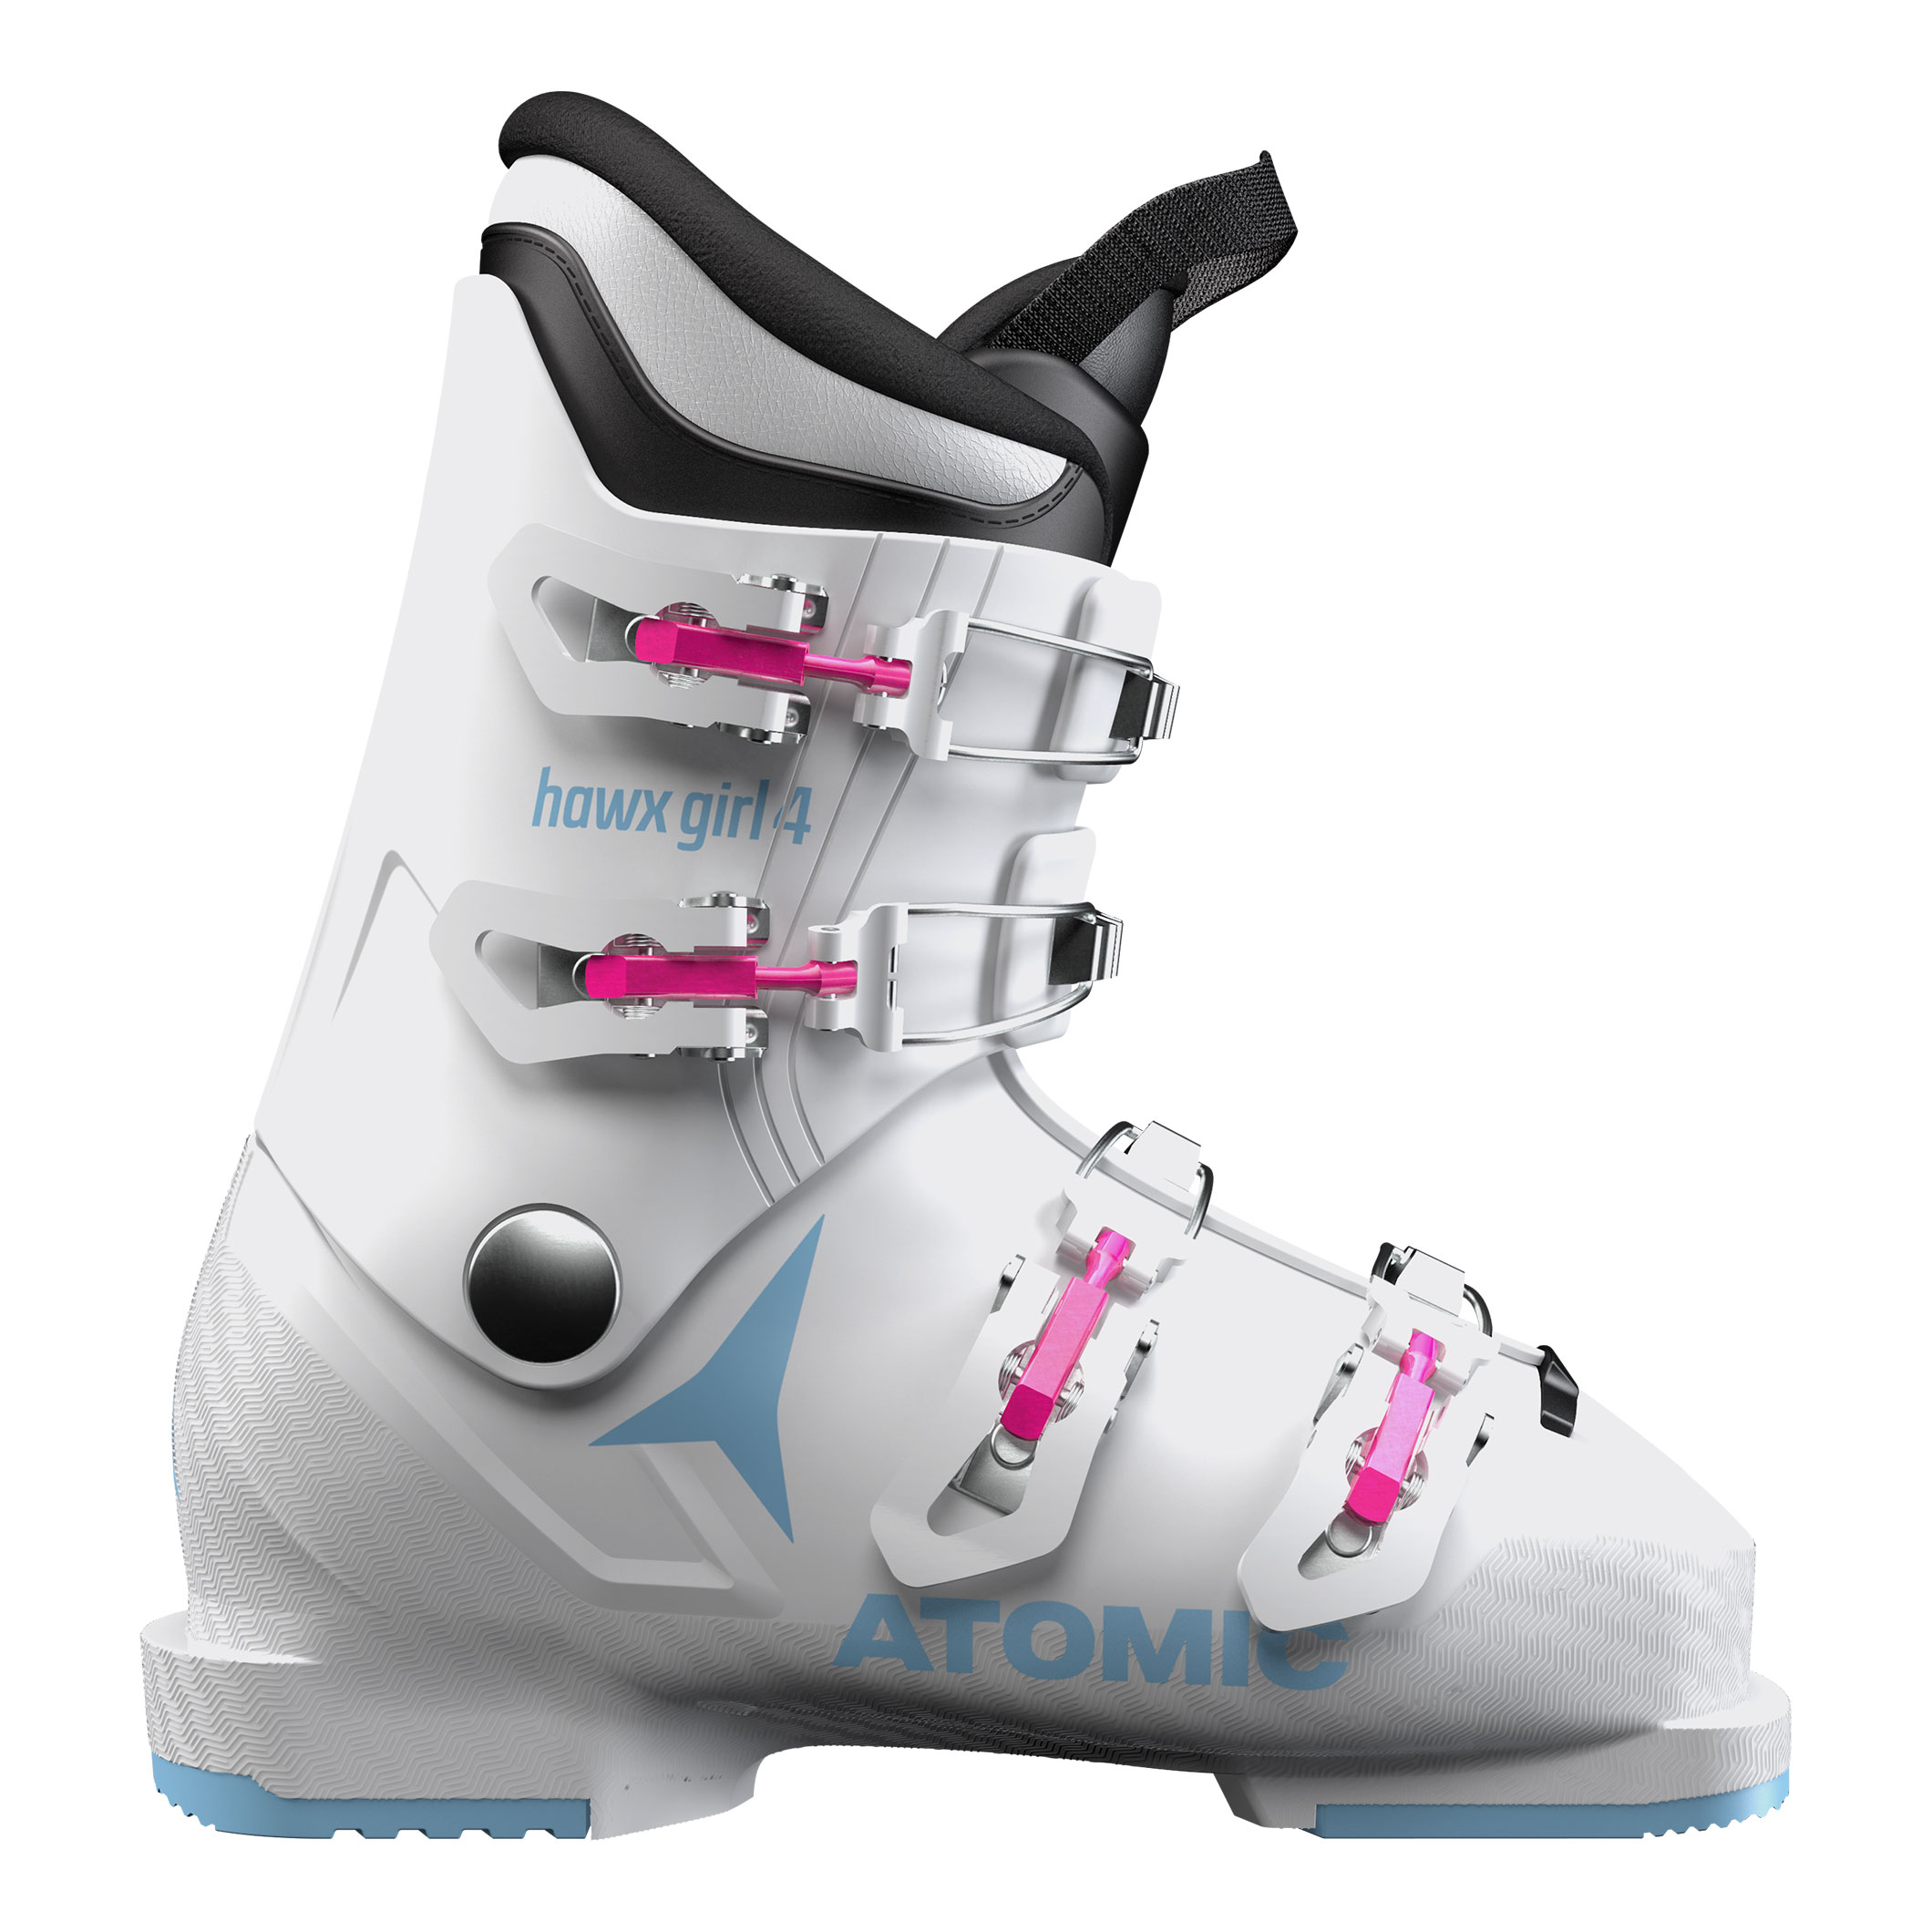 Ski Boots -  atomic Hawx Girl 4